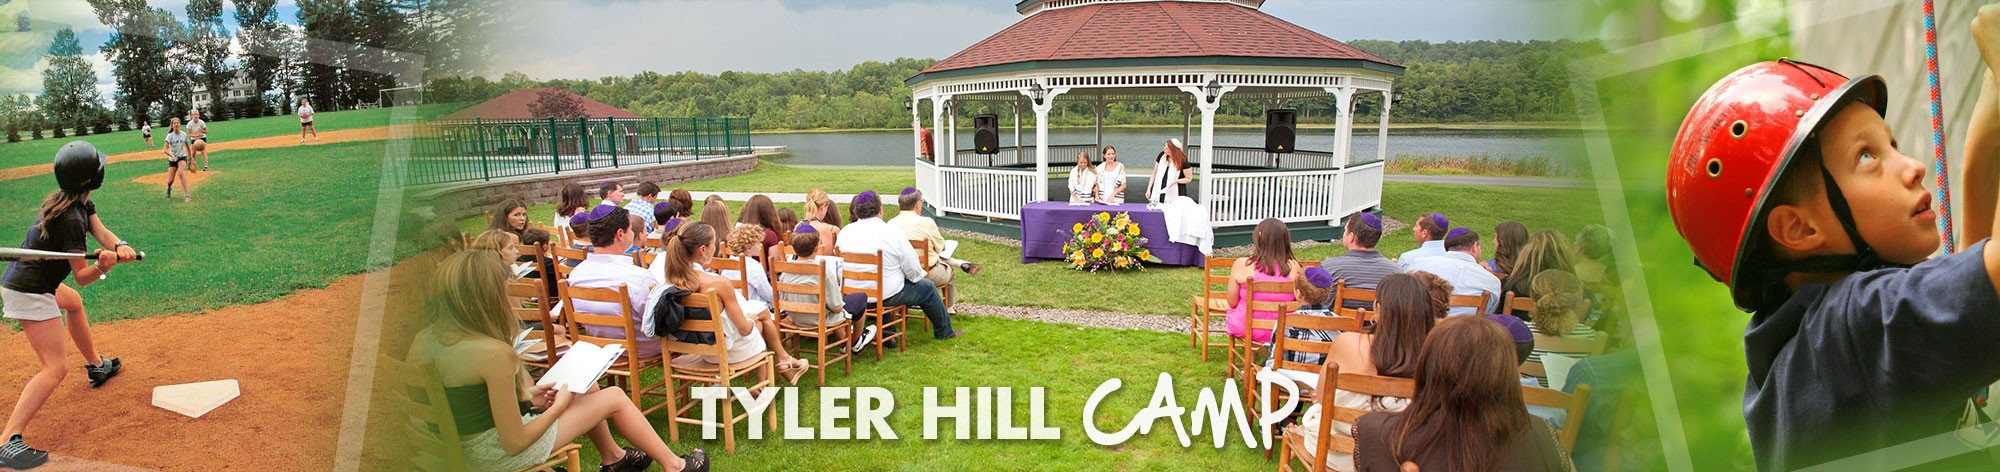 tyler hill camp rentals